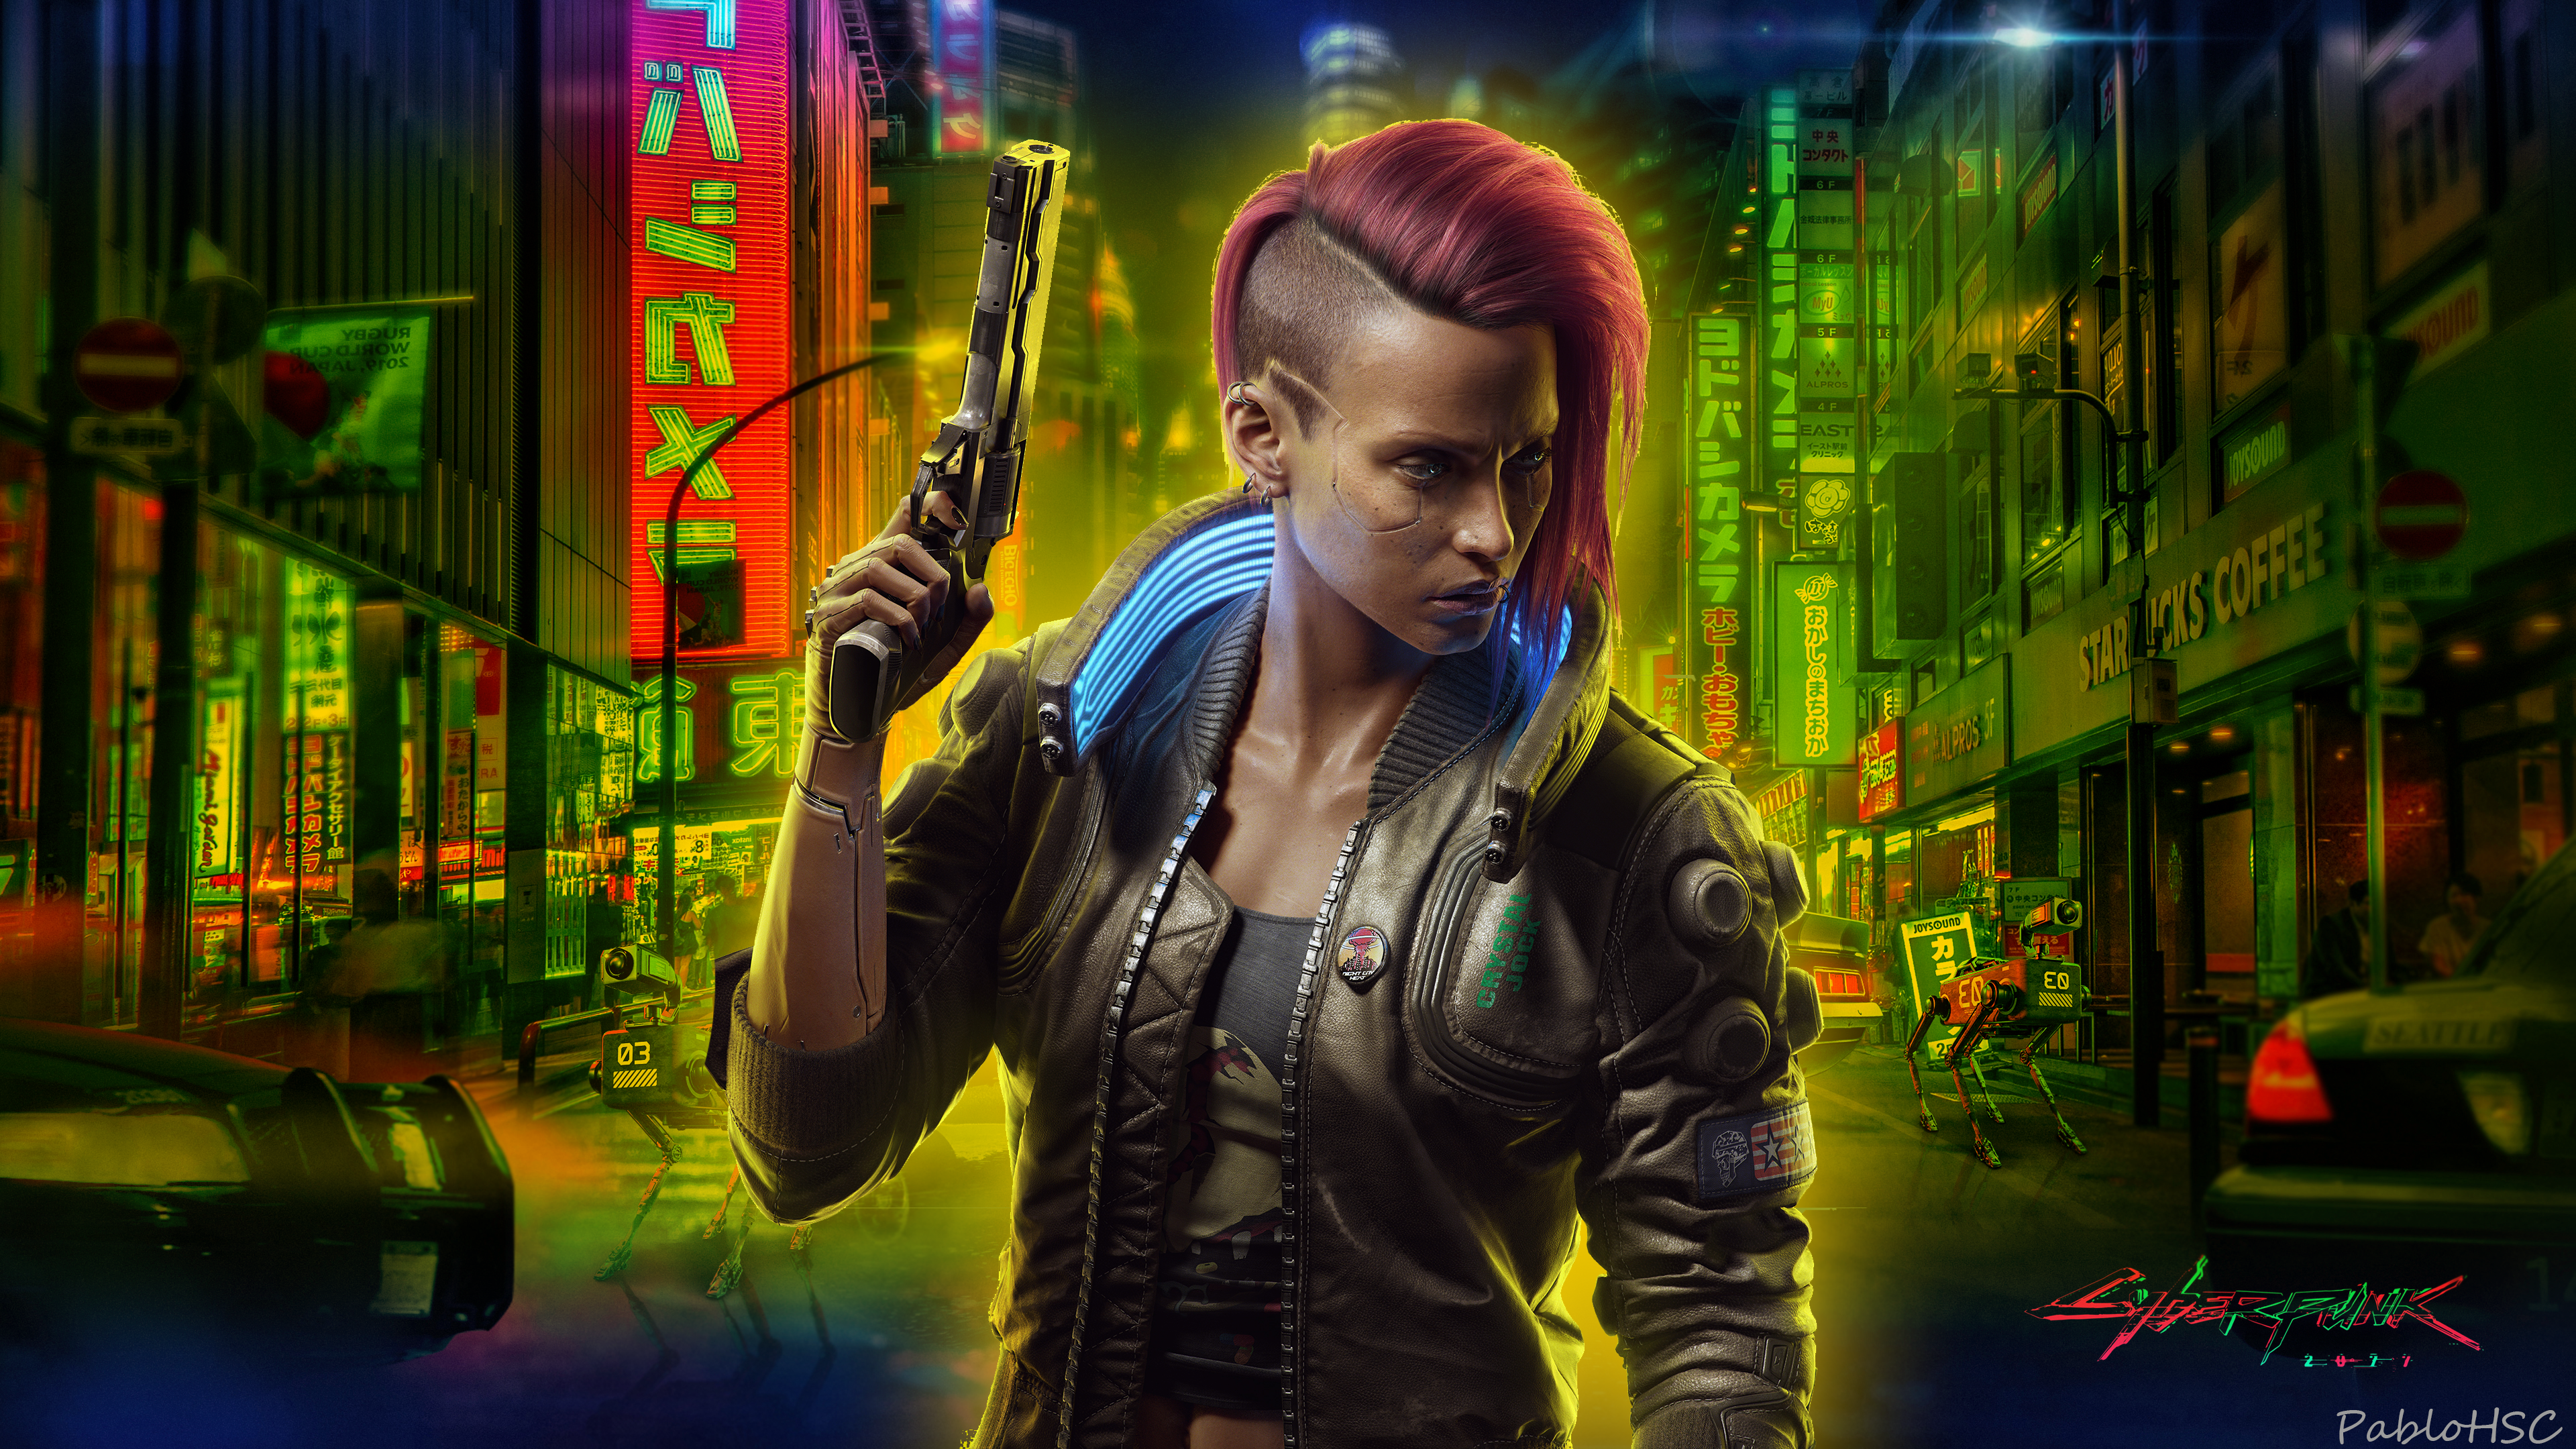 Female V (night street), V (Cyberpunk 2077) Gallery HD Wallpaper